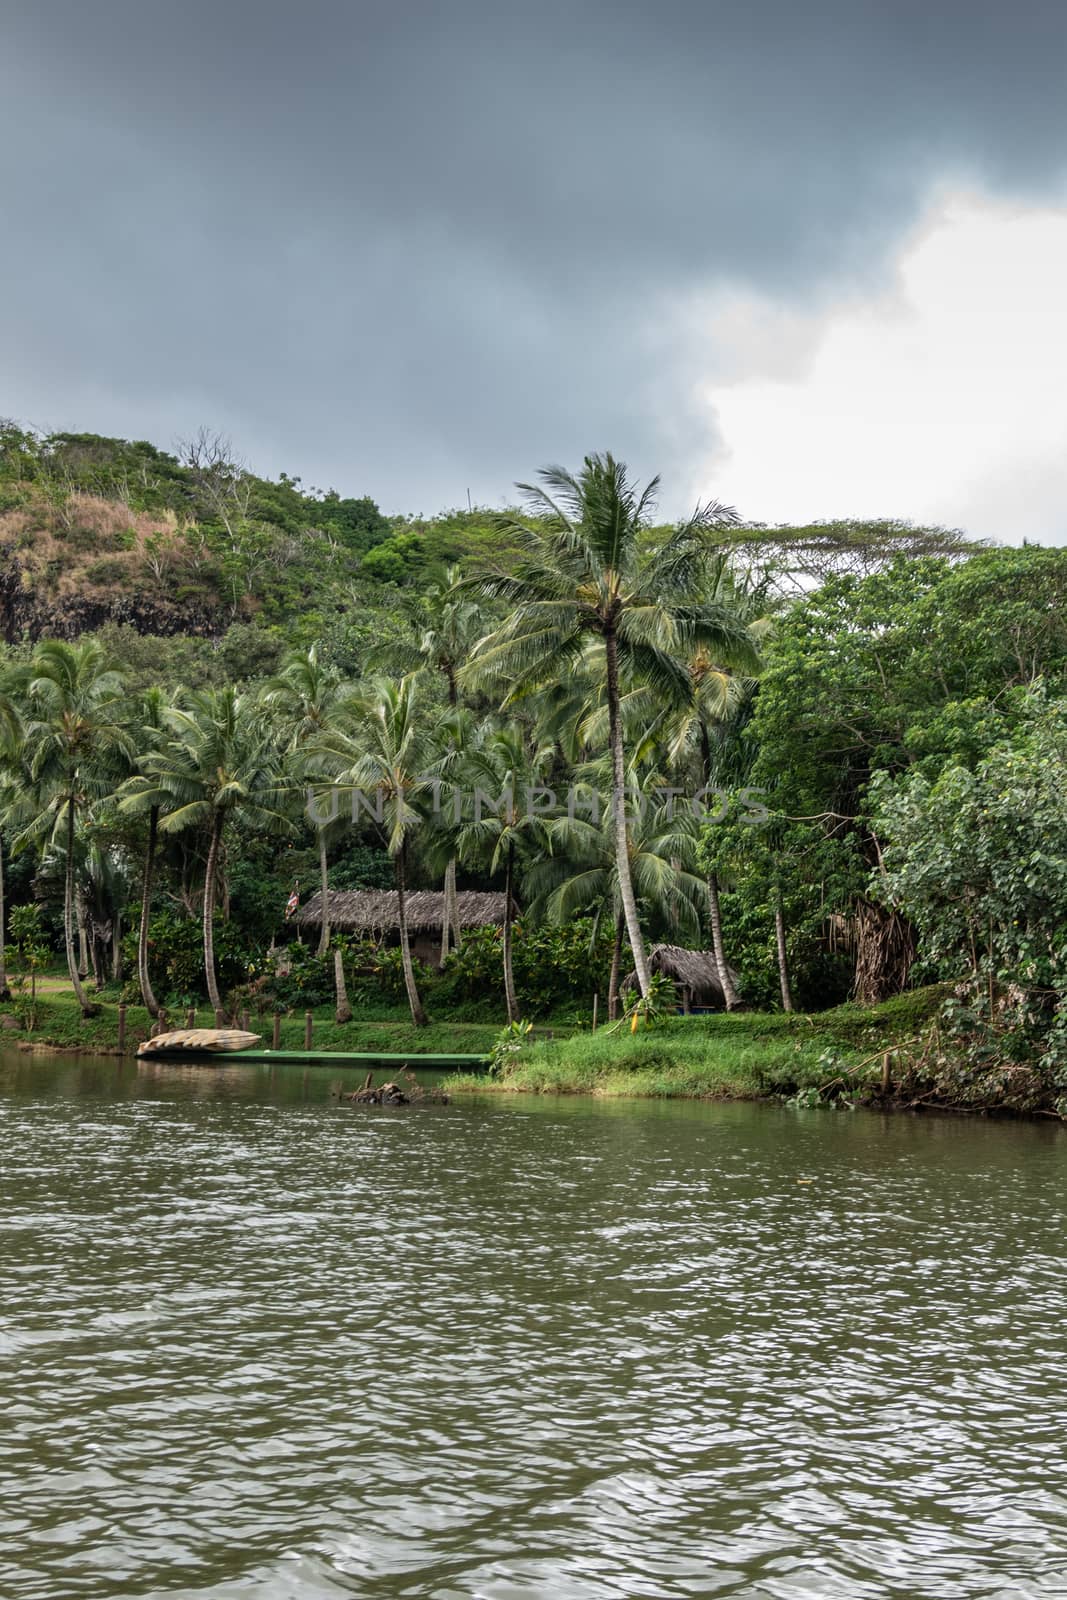 Nawiliwili, Kauai, Hawaii, USA. - January 16, 2020: Straw huts on shore of South Fork Wailua River with green palm tree shoreline under gray rainy cloudscape. 